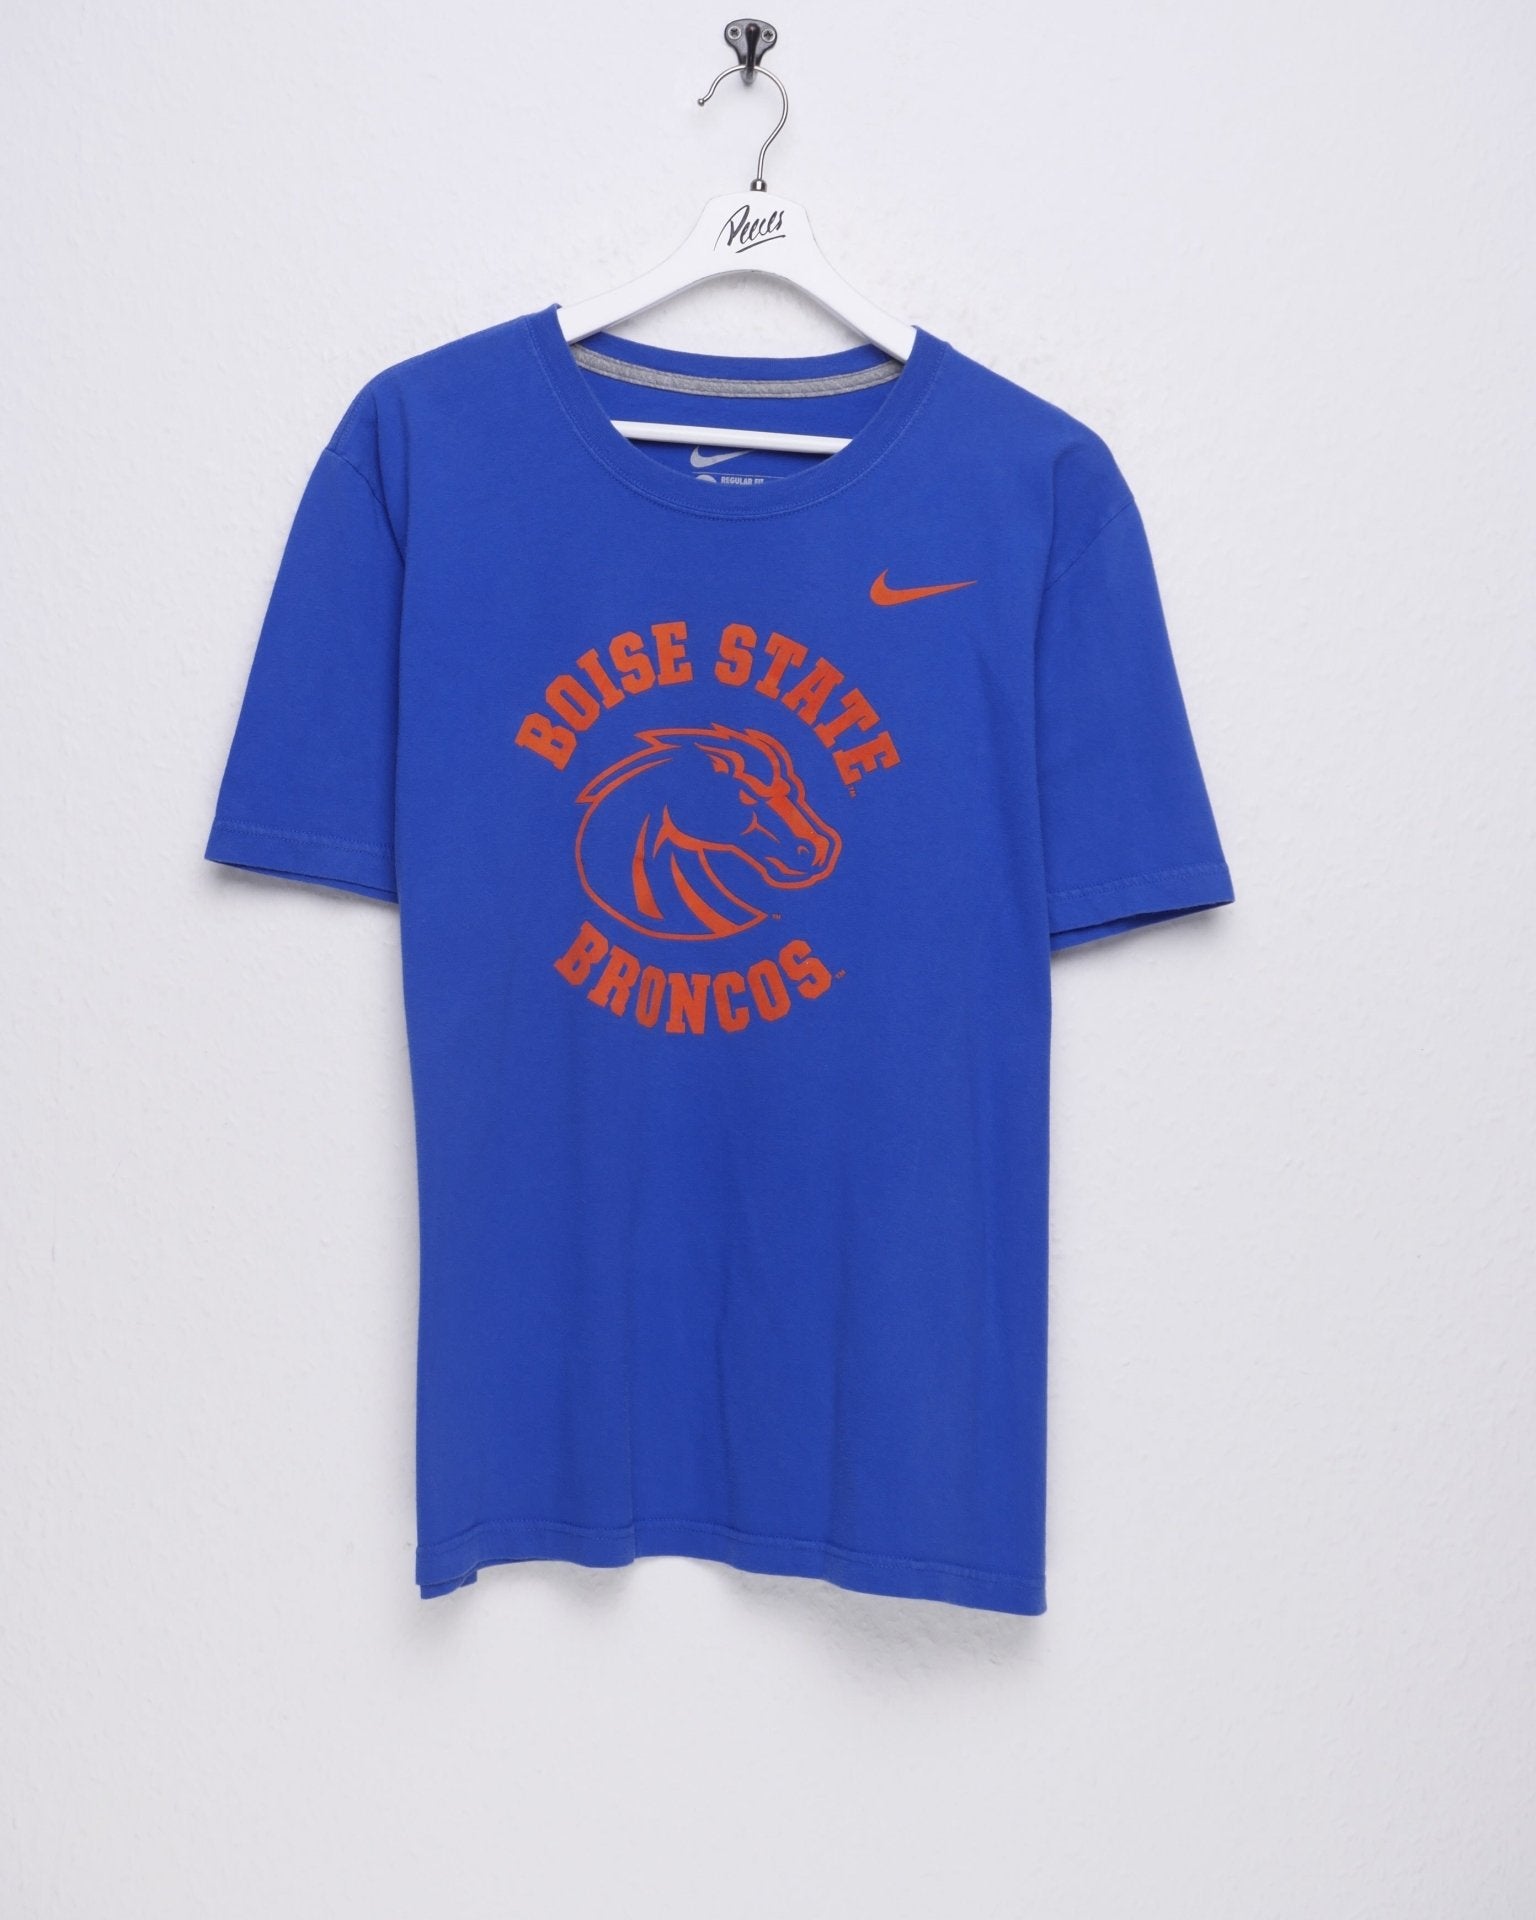 Nike Boise State Broncos printed Swoosh blue Shirt - Peeces